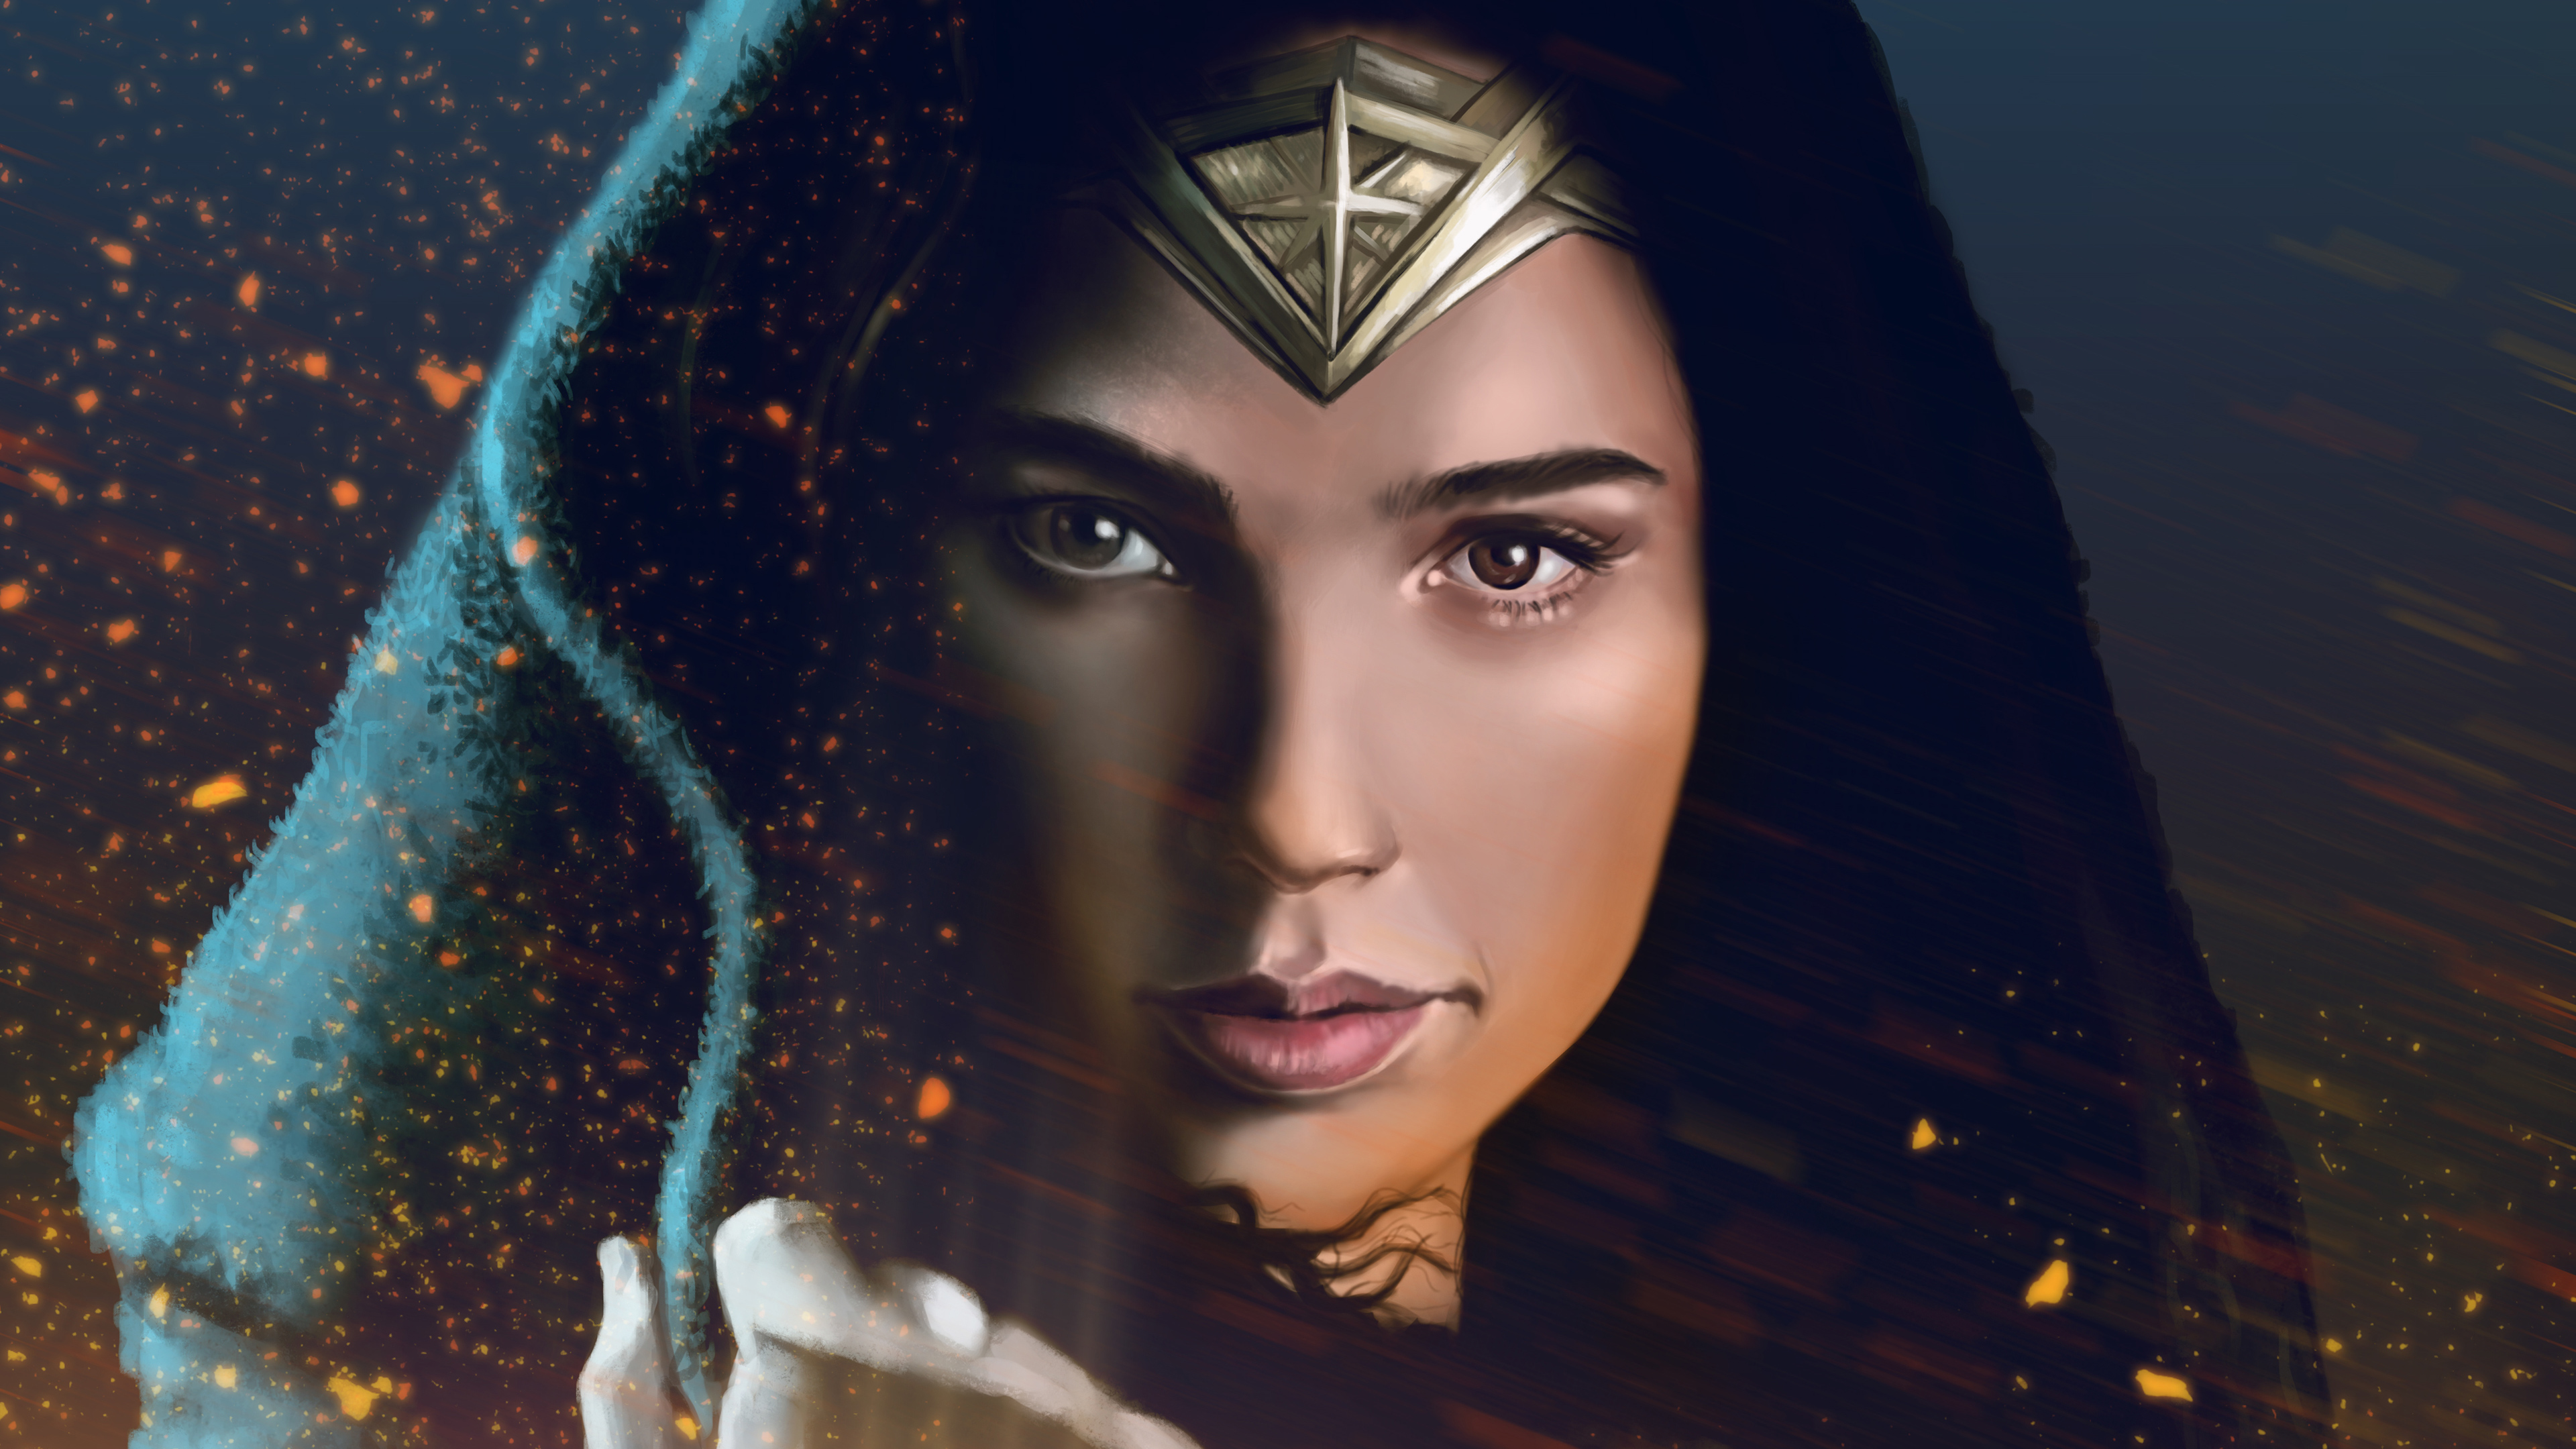 New Wonder Woman 2 Art Wallpapers